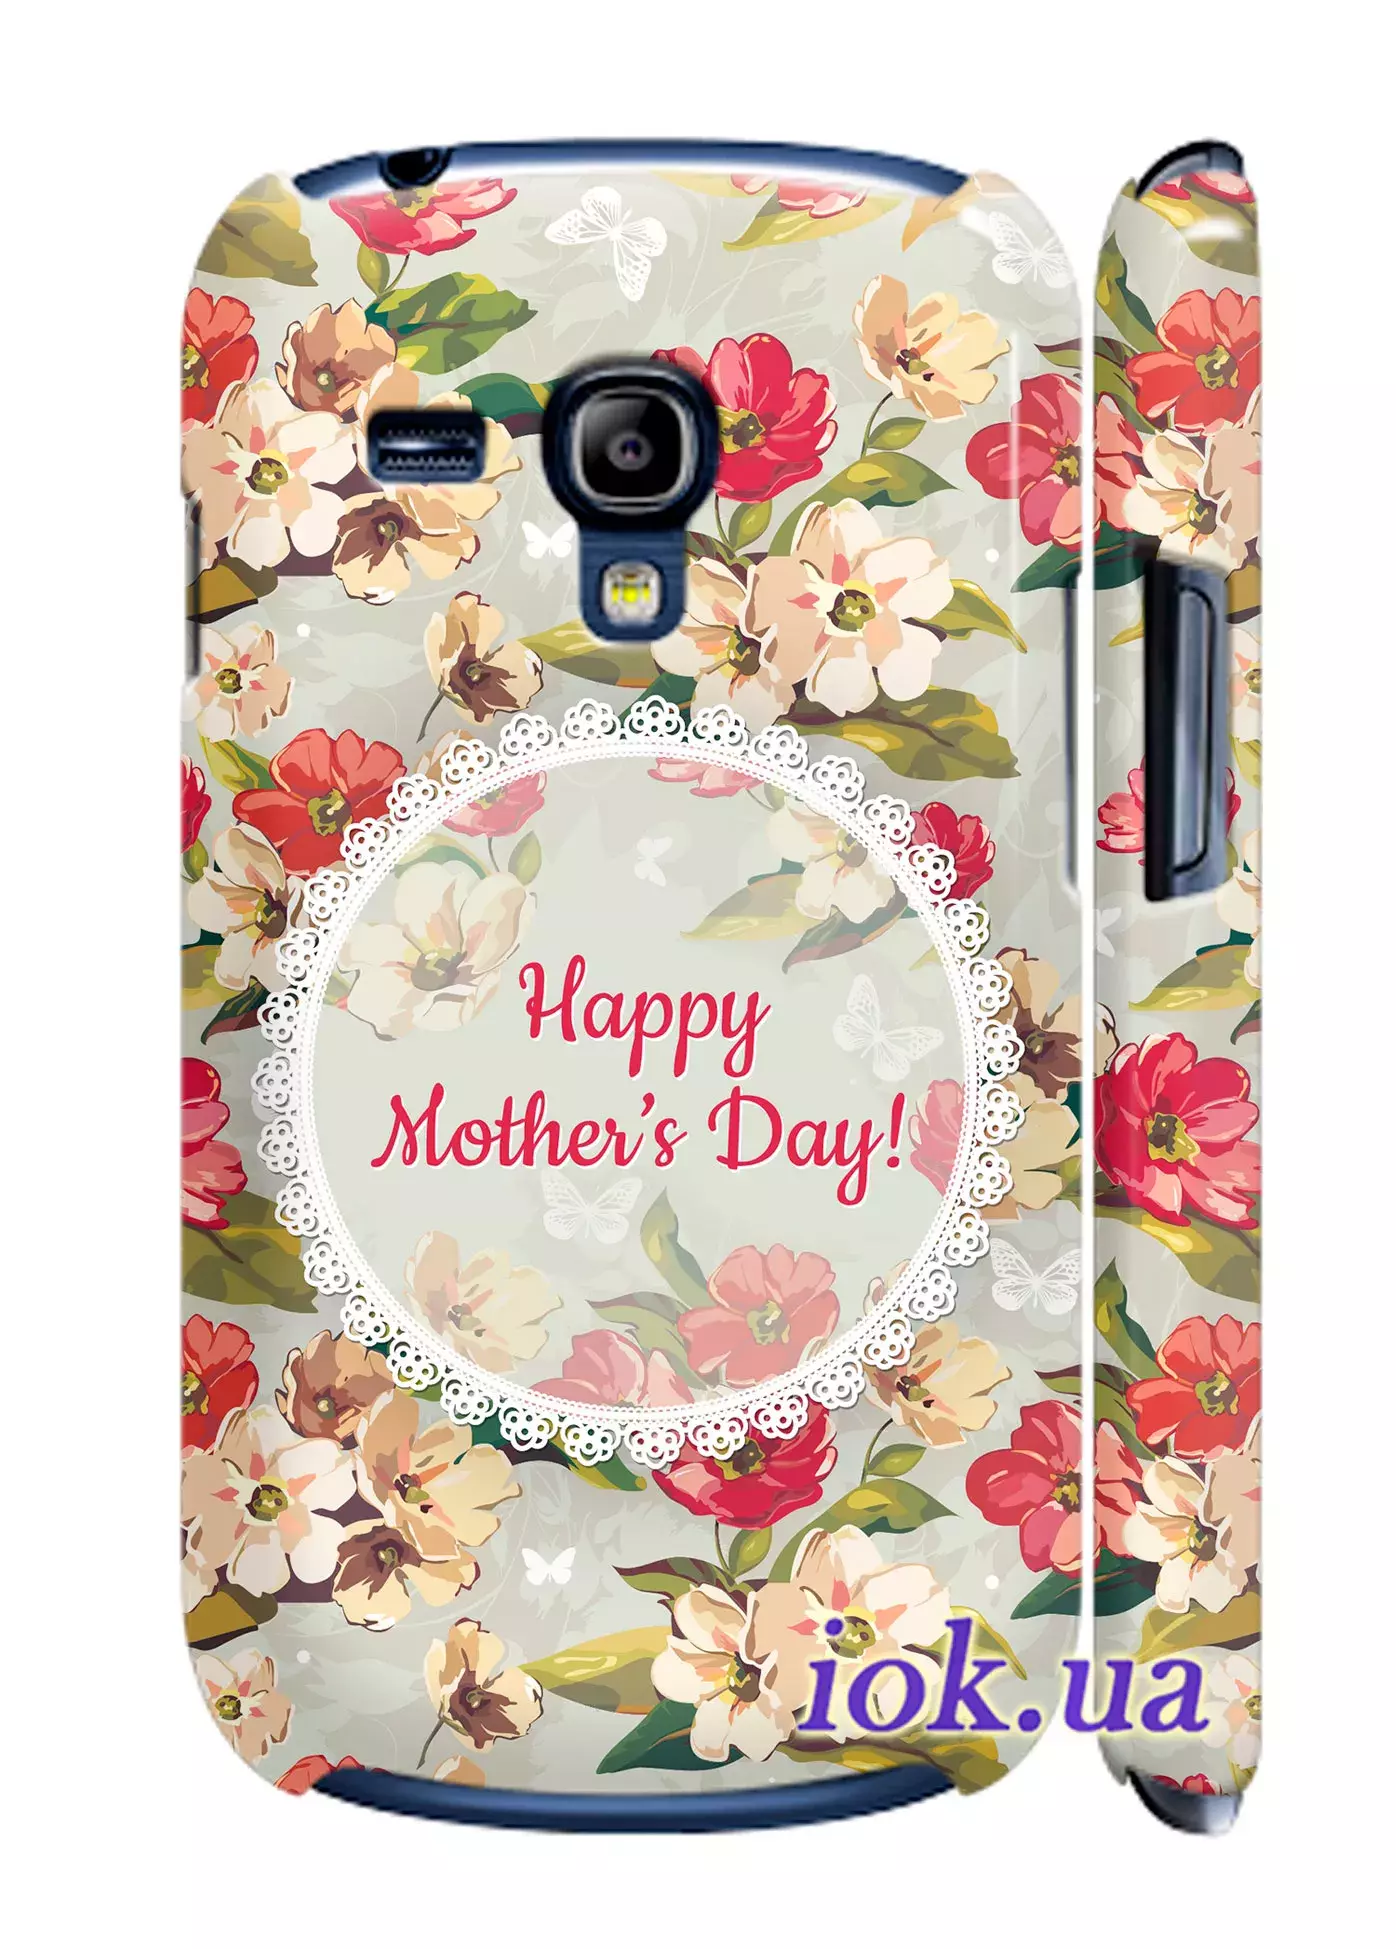 Чехол для Galaxy S3 Mini - День матери